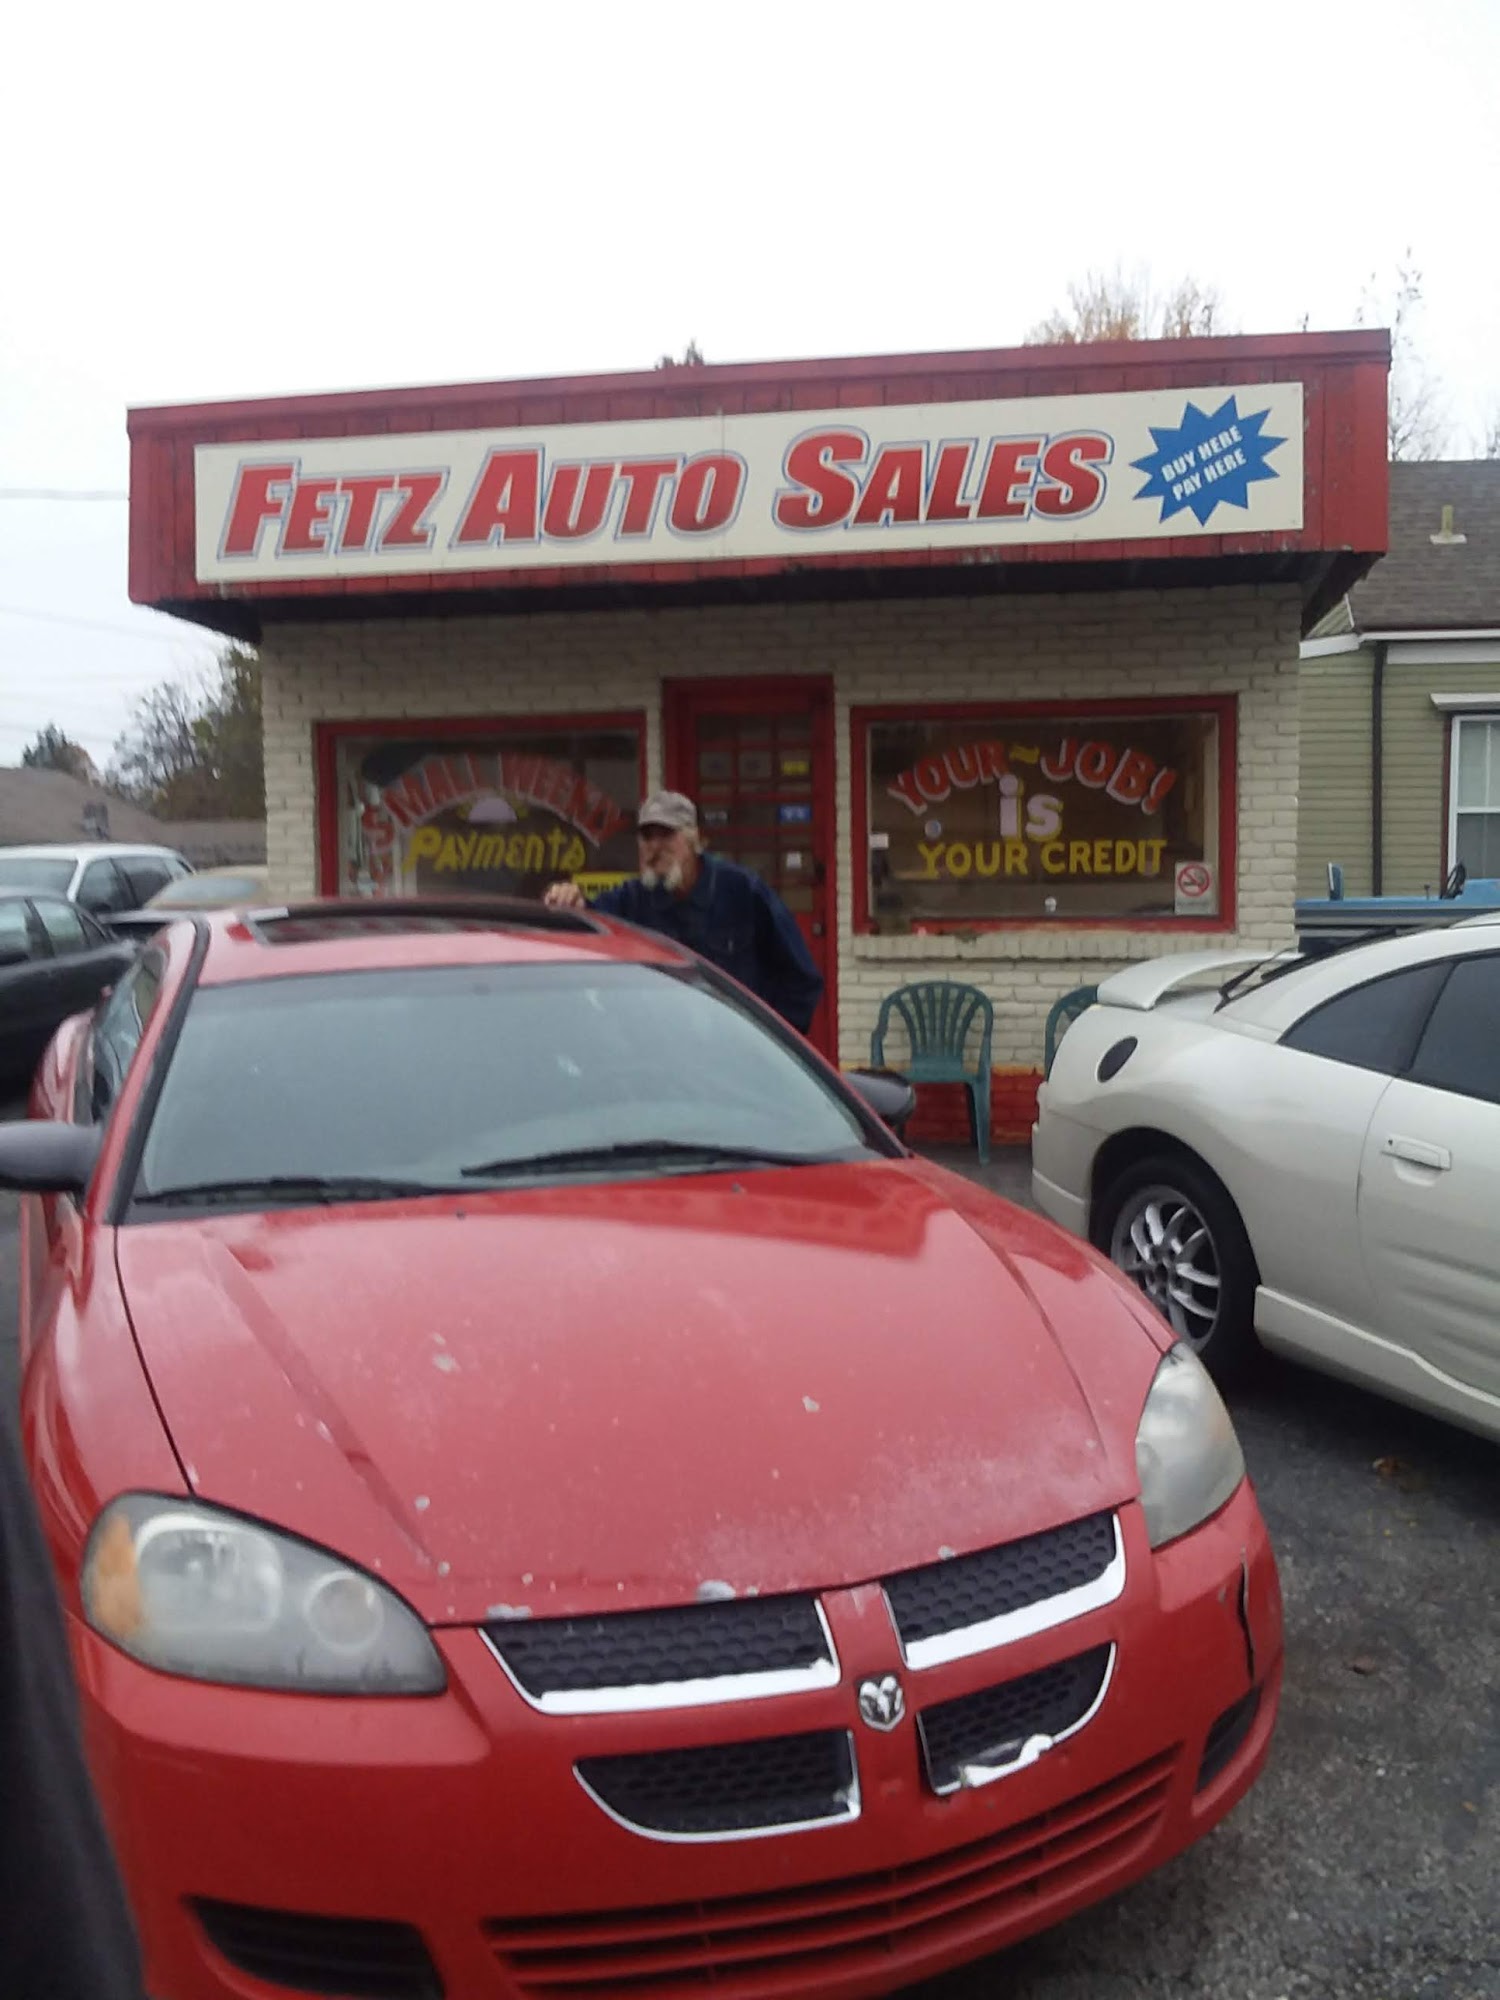 Fetz Auto Sales